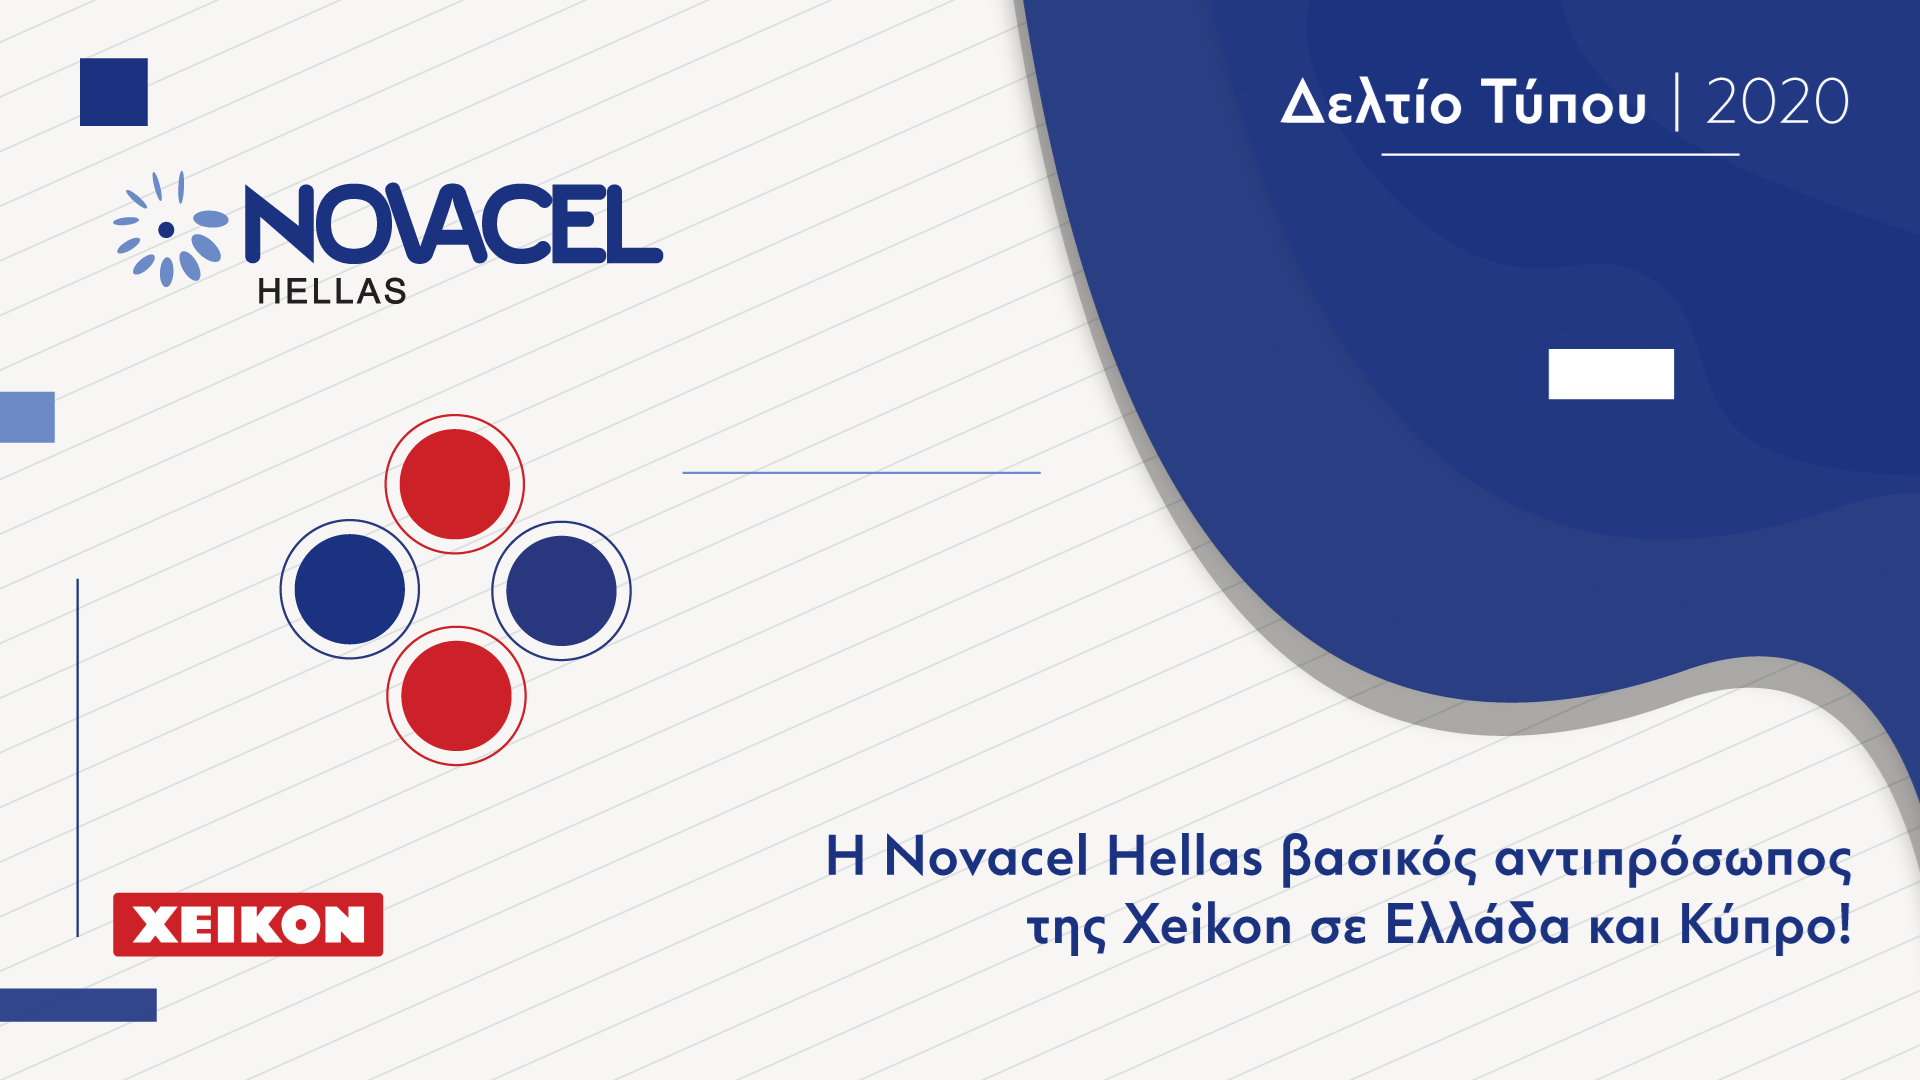 Novacel Hellas και Xeikon σε μία συνεργασία που ενδυναμώνει την παρουσία και των δύο εταιρειών σε Ελλάδα και Κύπρο